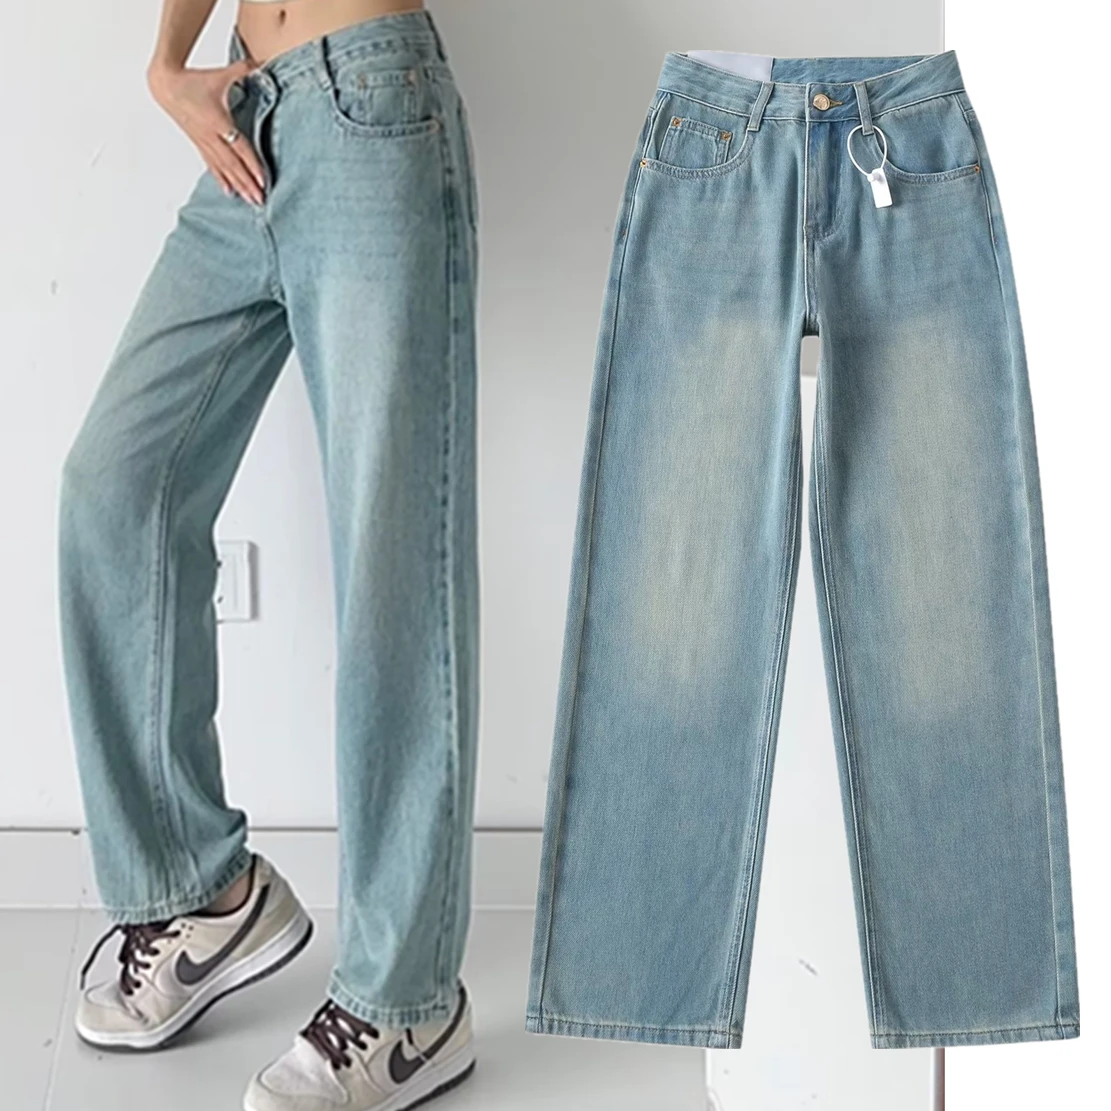 Jenny&Dave American Retro Mom Jeans Distressed Loose Harem Jeans Women New Fashion High Waist Denim Pants